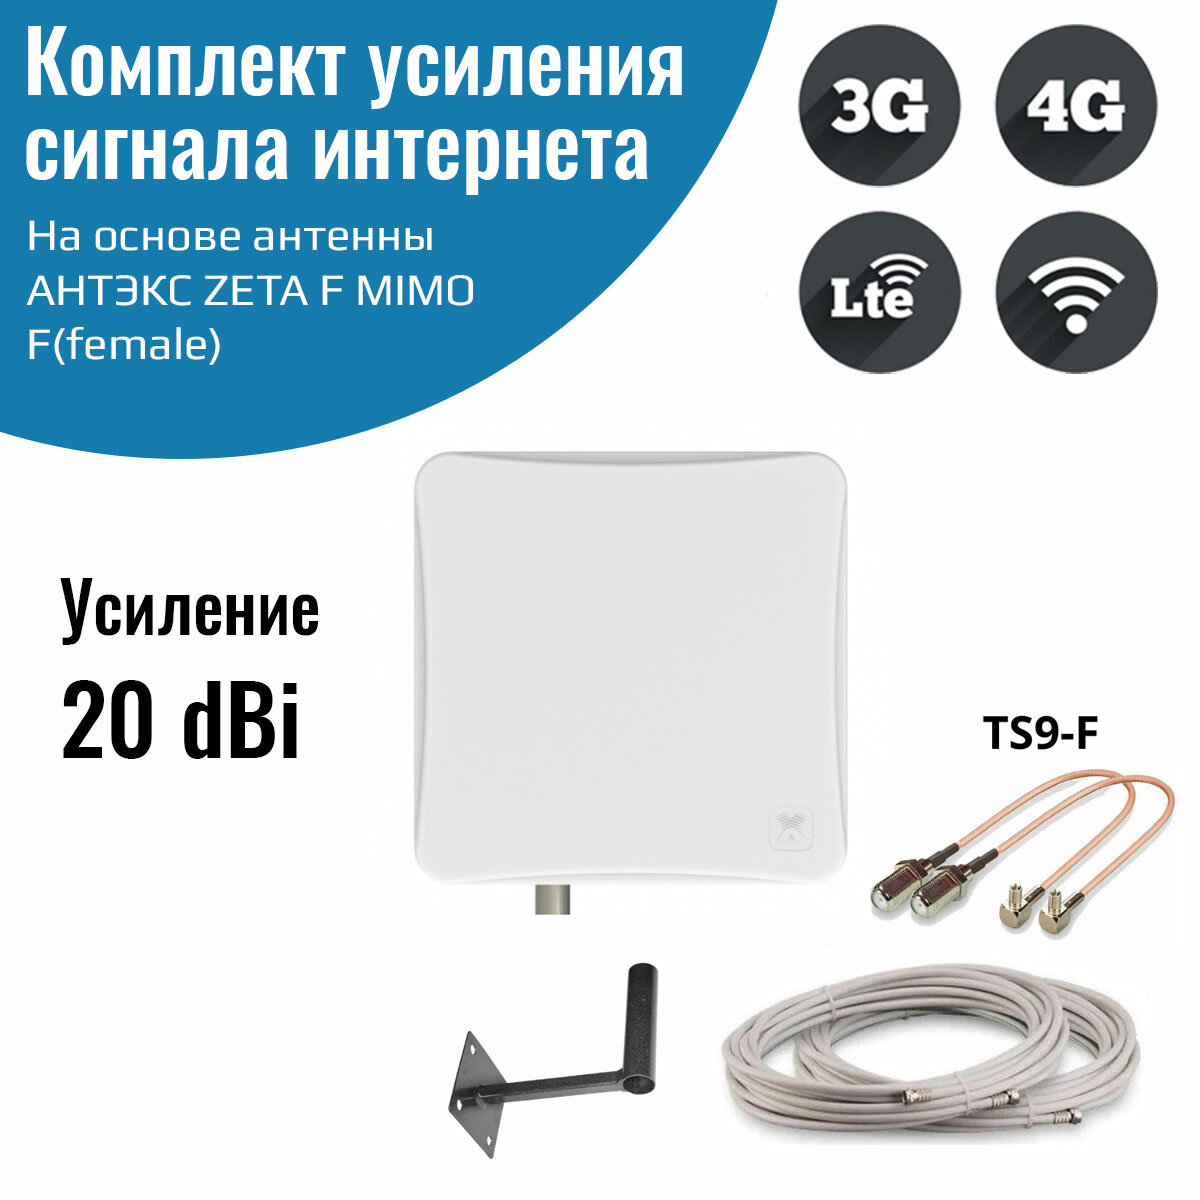 Усилитель интернет сигнала 2G/3G/WiFi/4G антенна ZETA F MIMO 20 dBi -F + кабель + кронштейн + переходники пигтейлы TS9-F